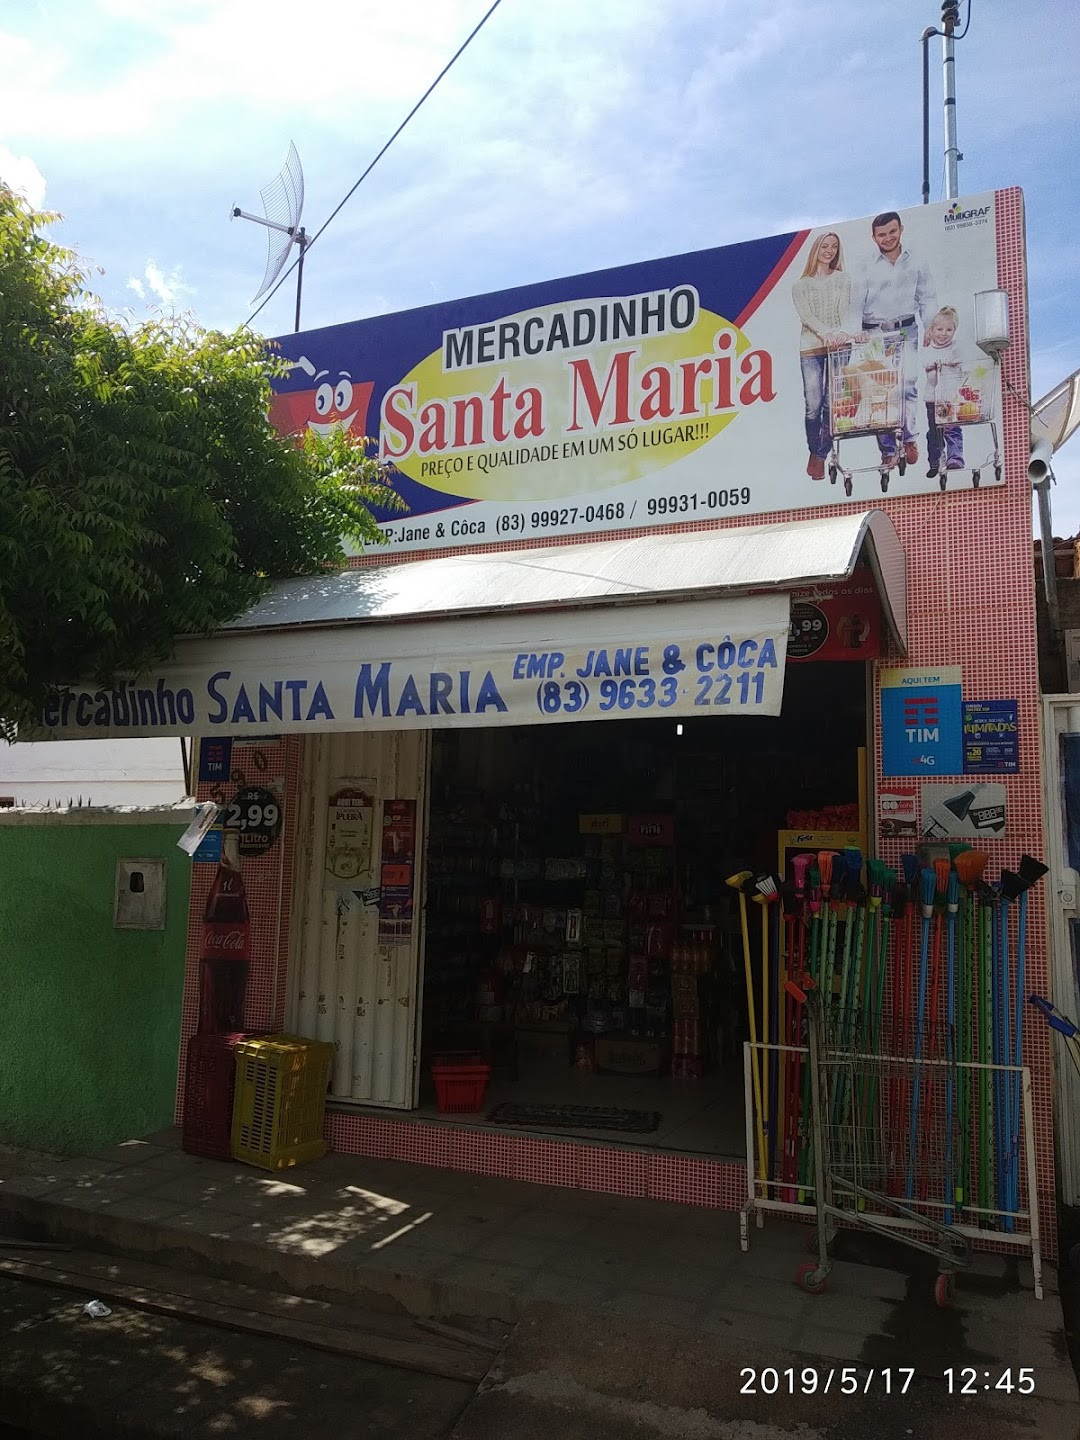 Mercadinho Santa Maria